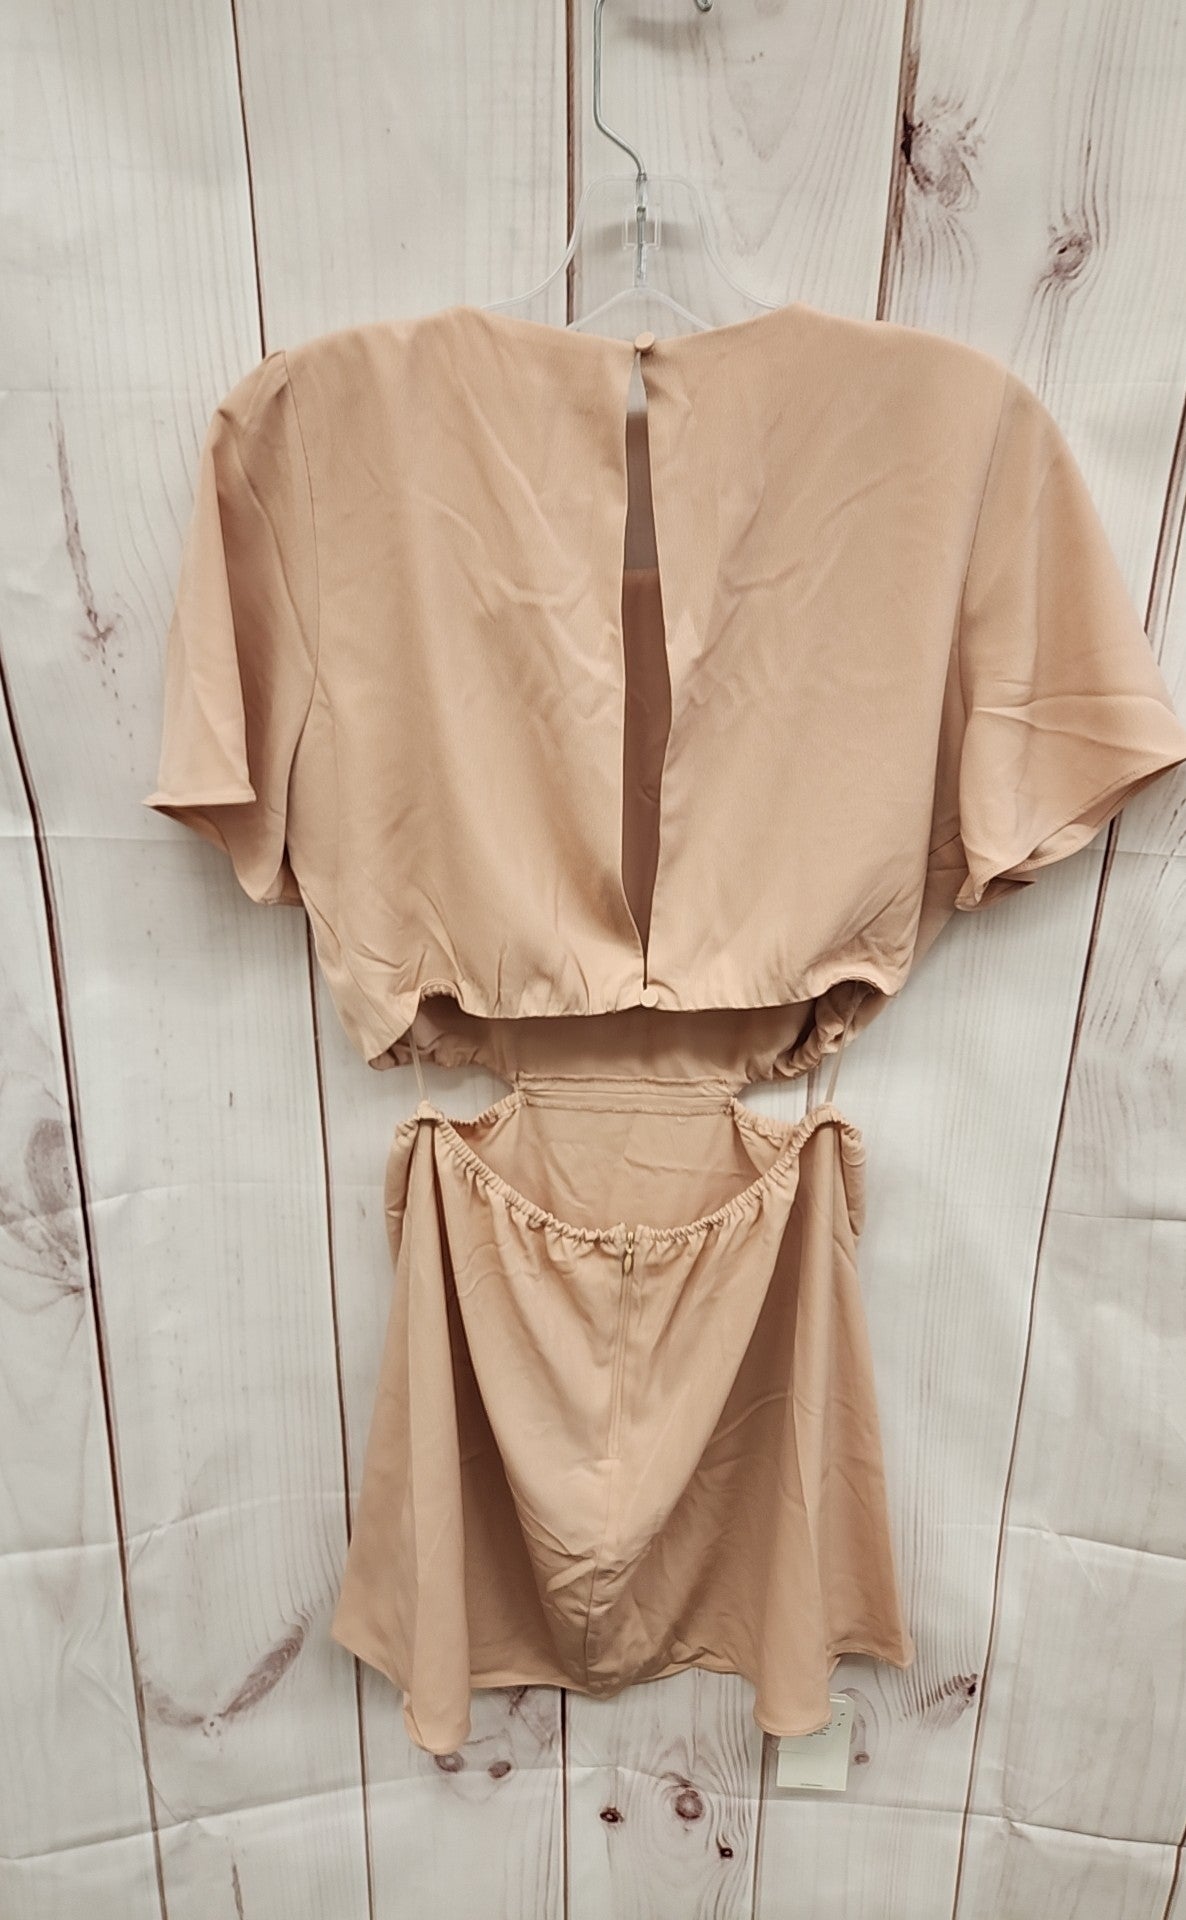 Abercrombie & Fitch Women's Size M Peach Dress NWT